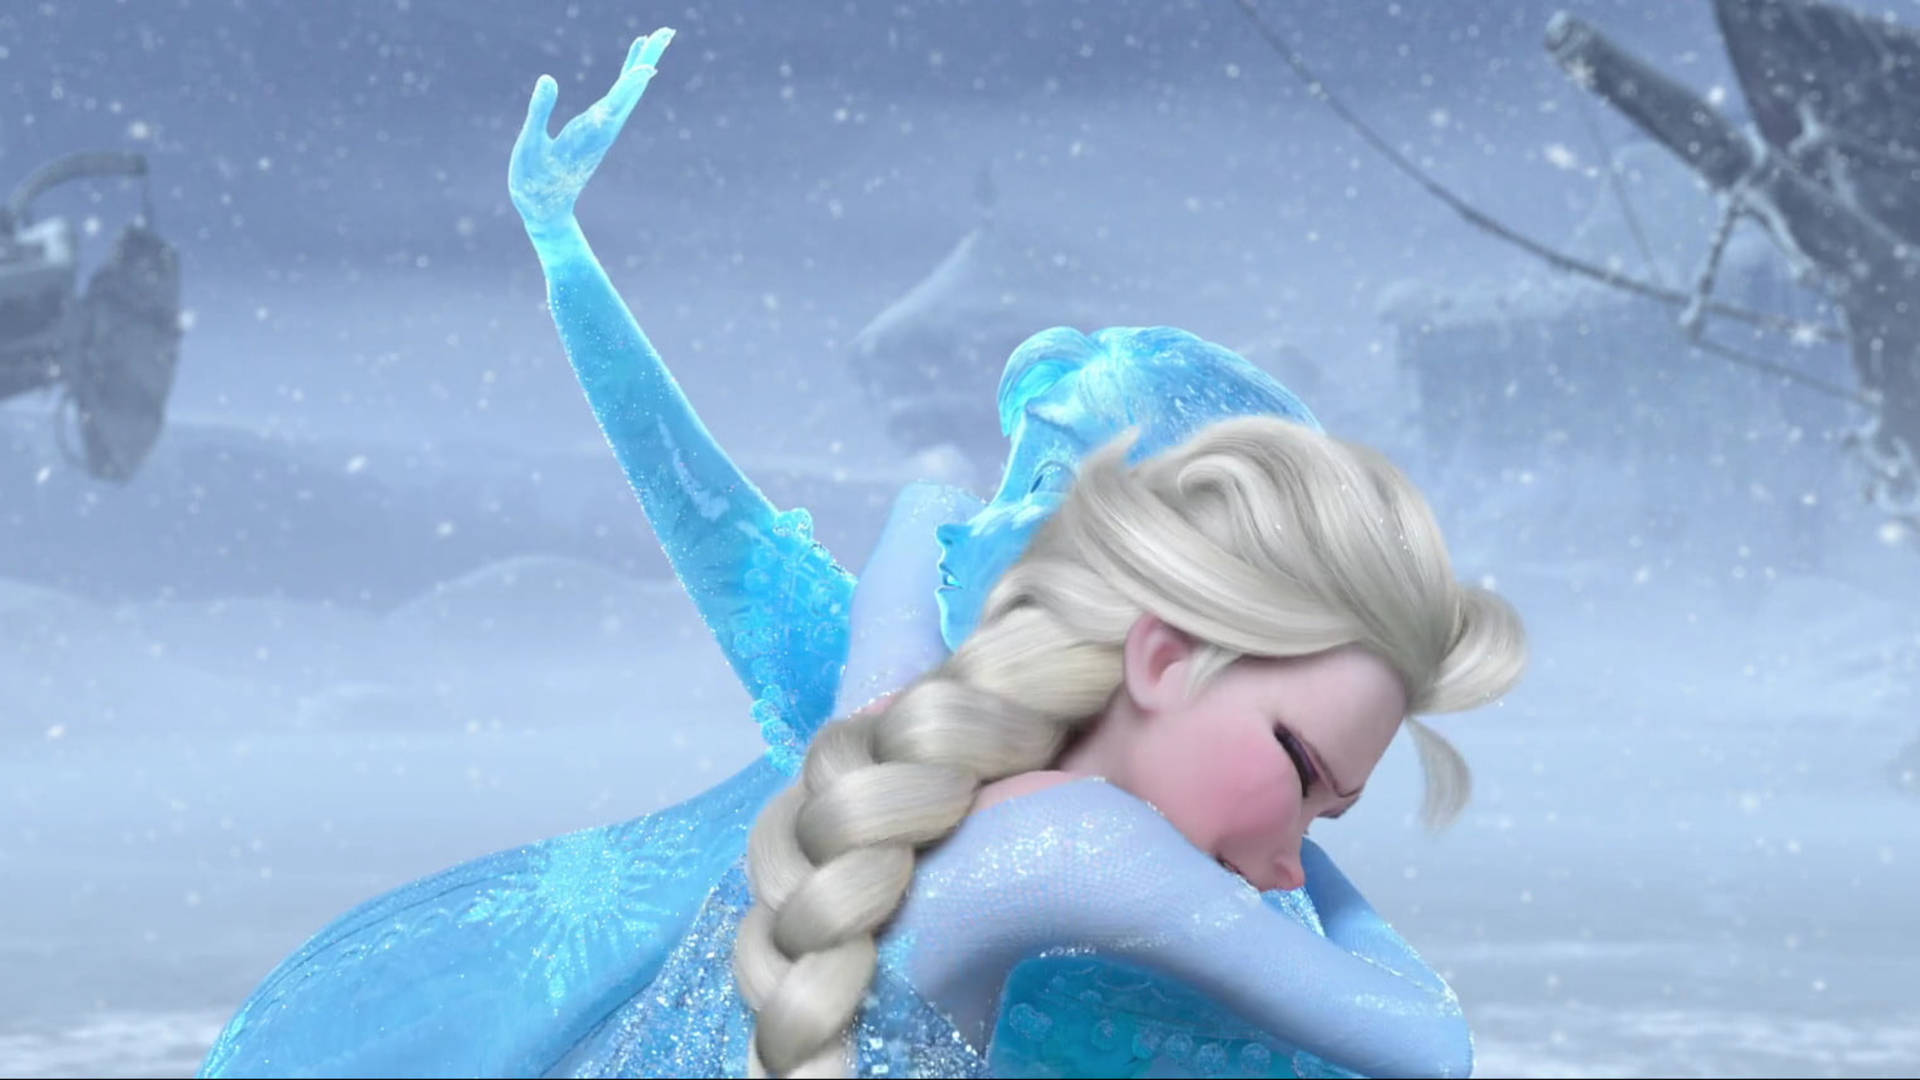 Download Frozen Elsa Anna Ice Statue Wallpaper Wallpapers.com - DaftSex HD